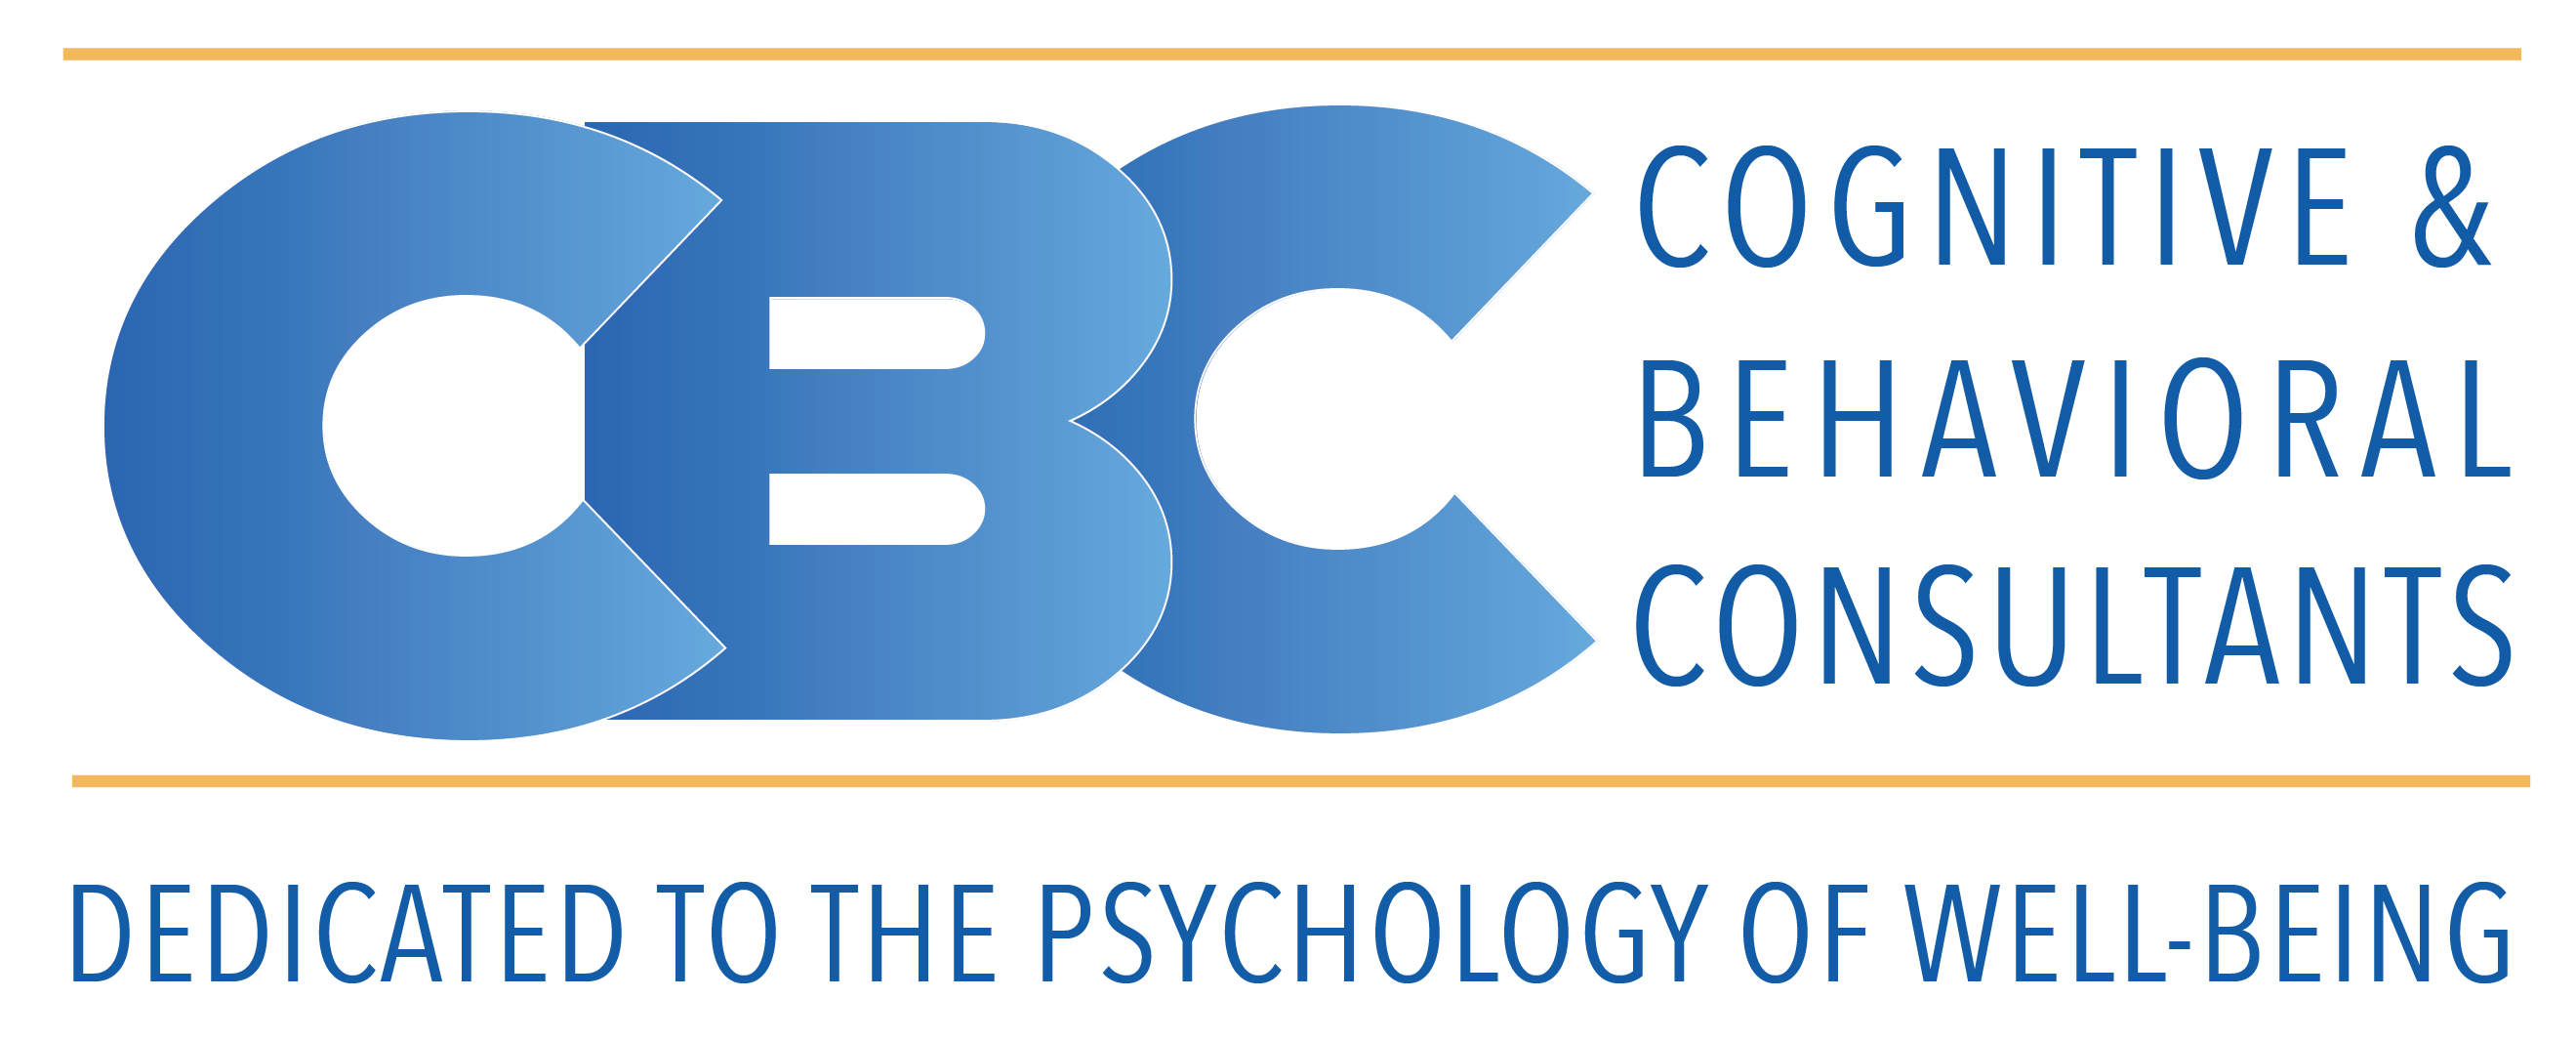 Cognitive Behavioral Consultants